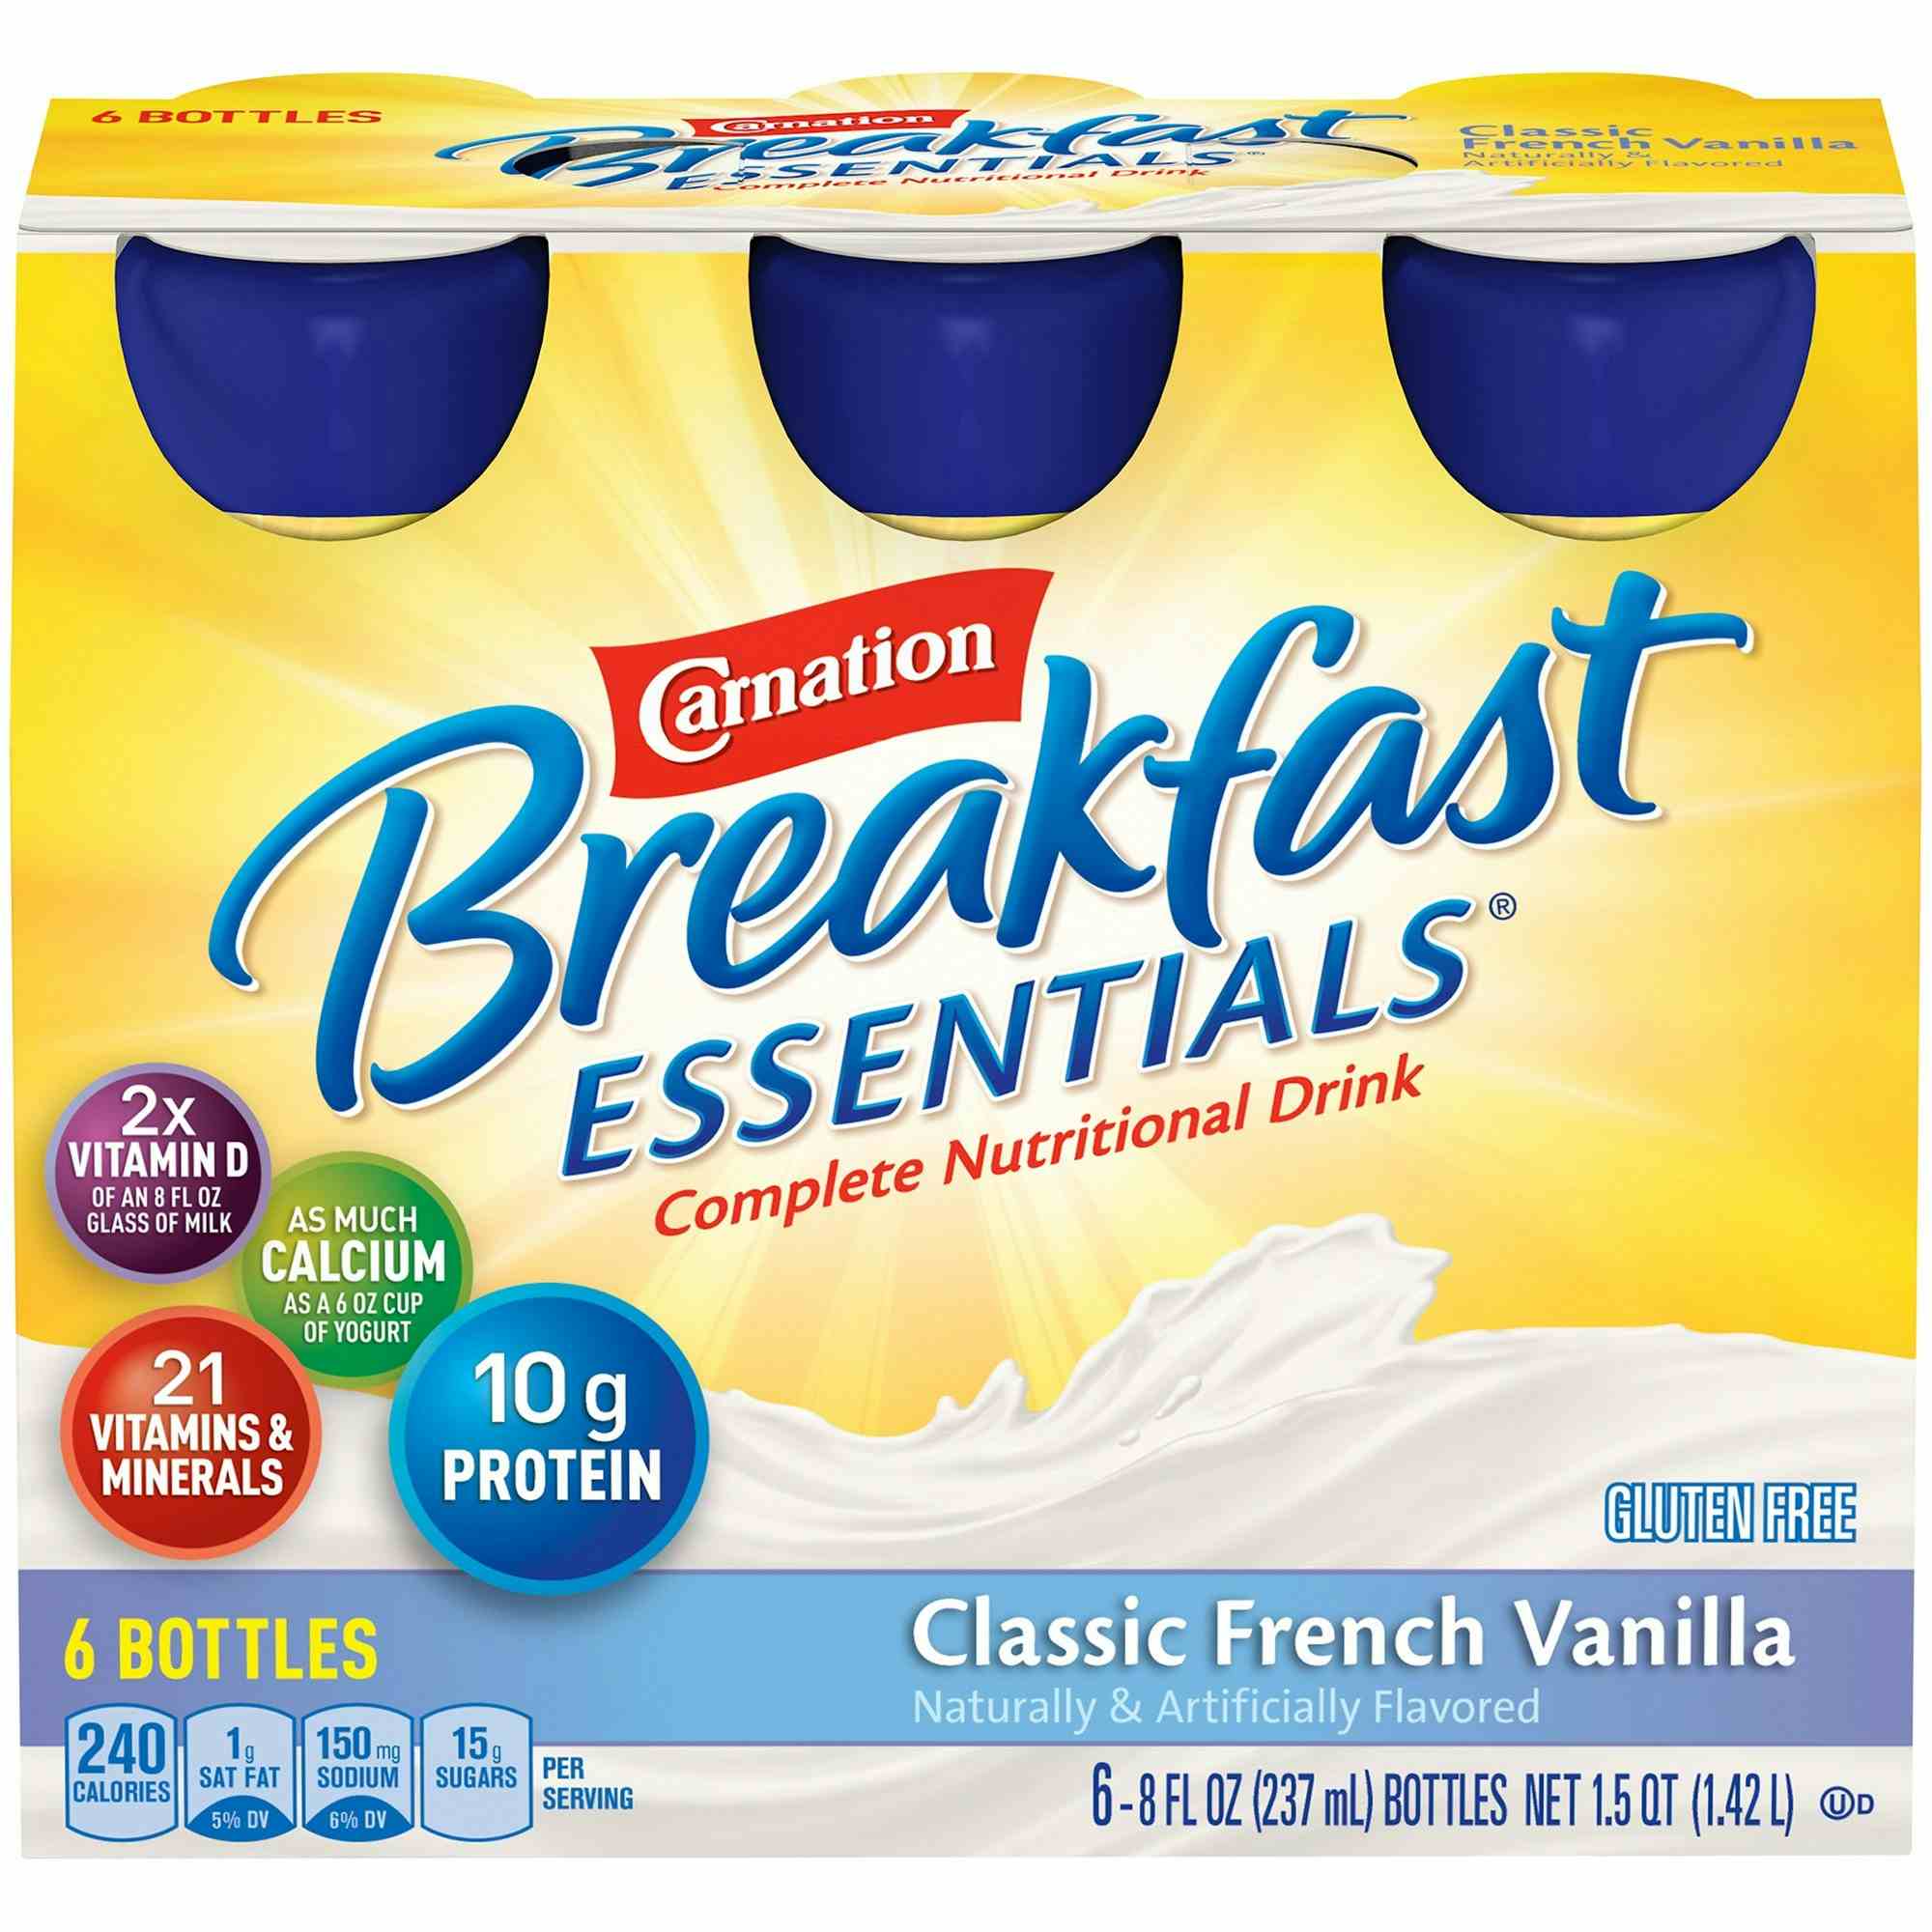 Carnation Breakfast Essentials Complete Nutritional Drink, French Vanilla, 8 oz,